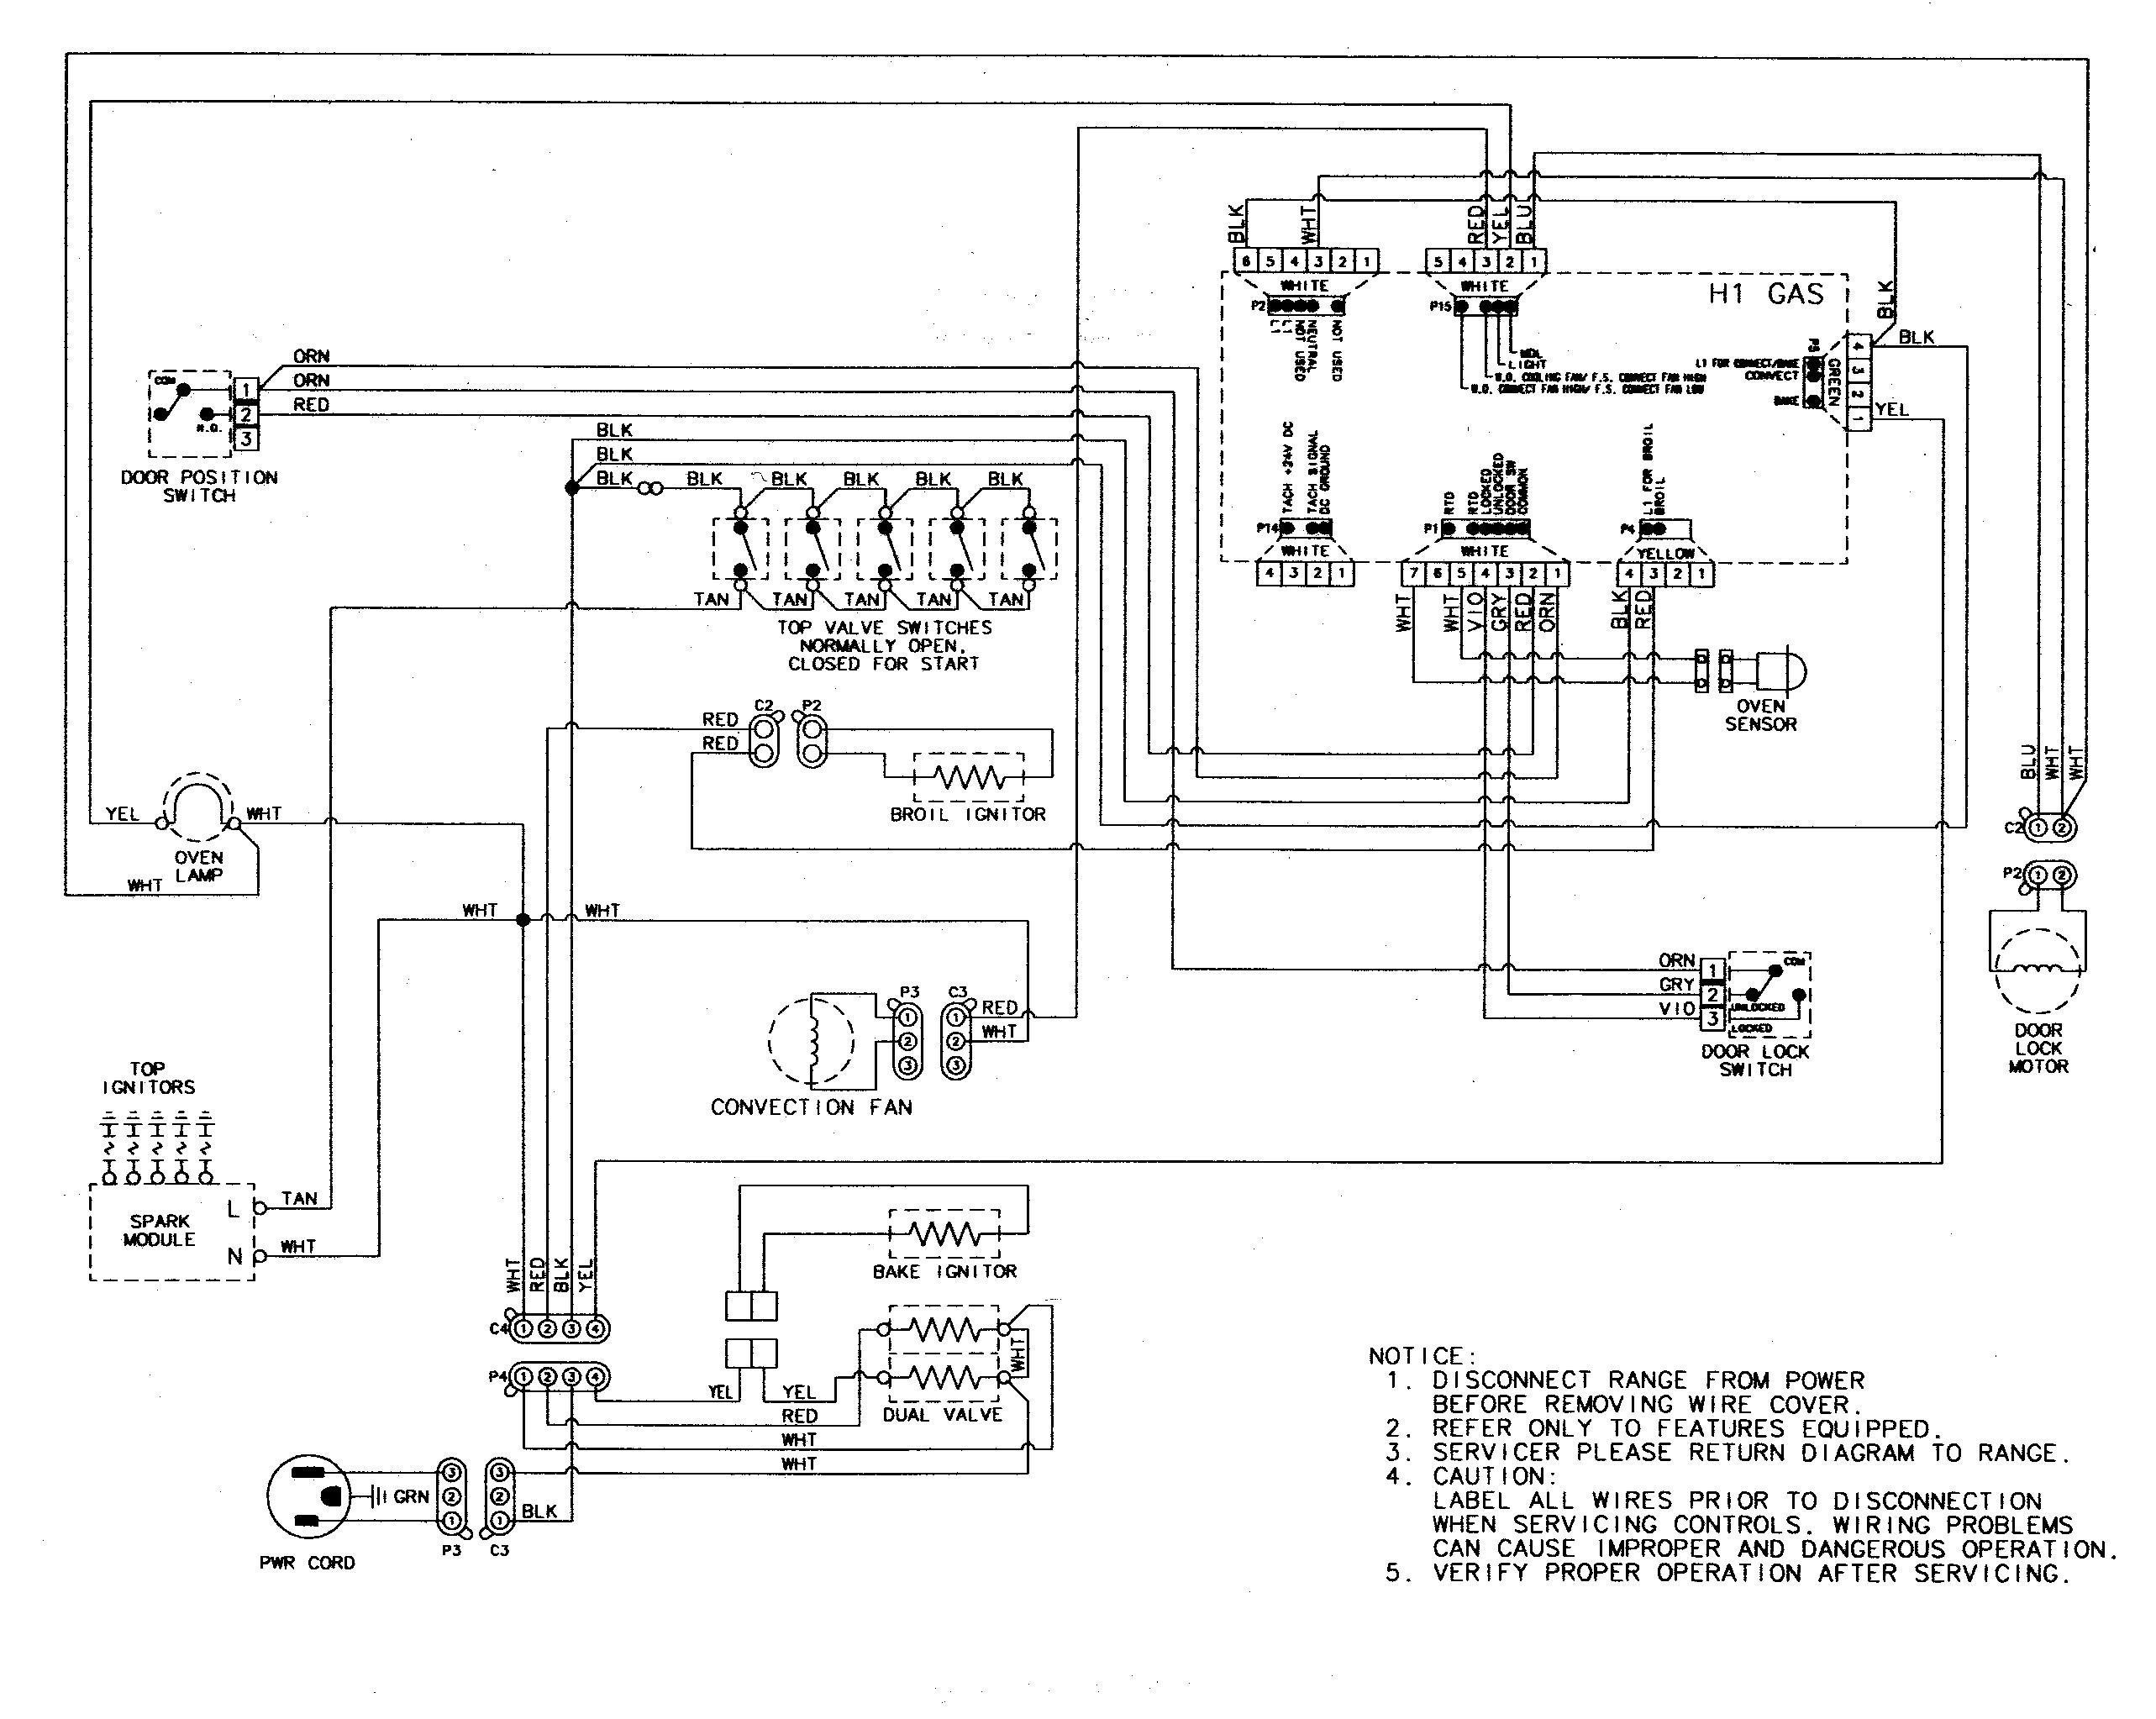 Wiring Diagram Appliance Dryer Best Whirlpool Gas Dryer Wiring Diagram Collection